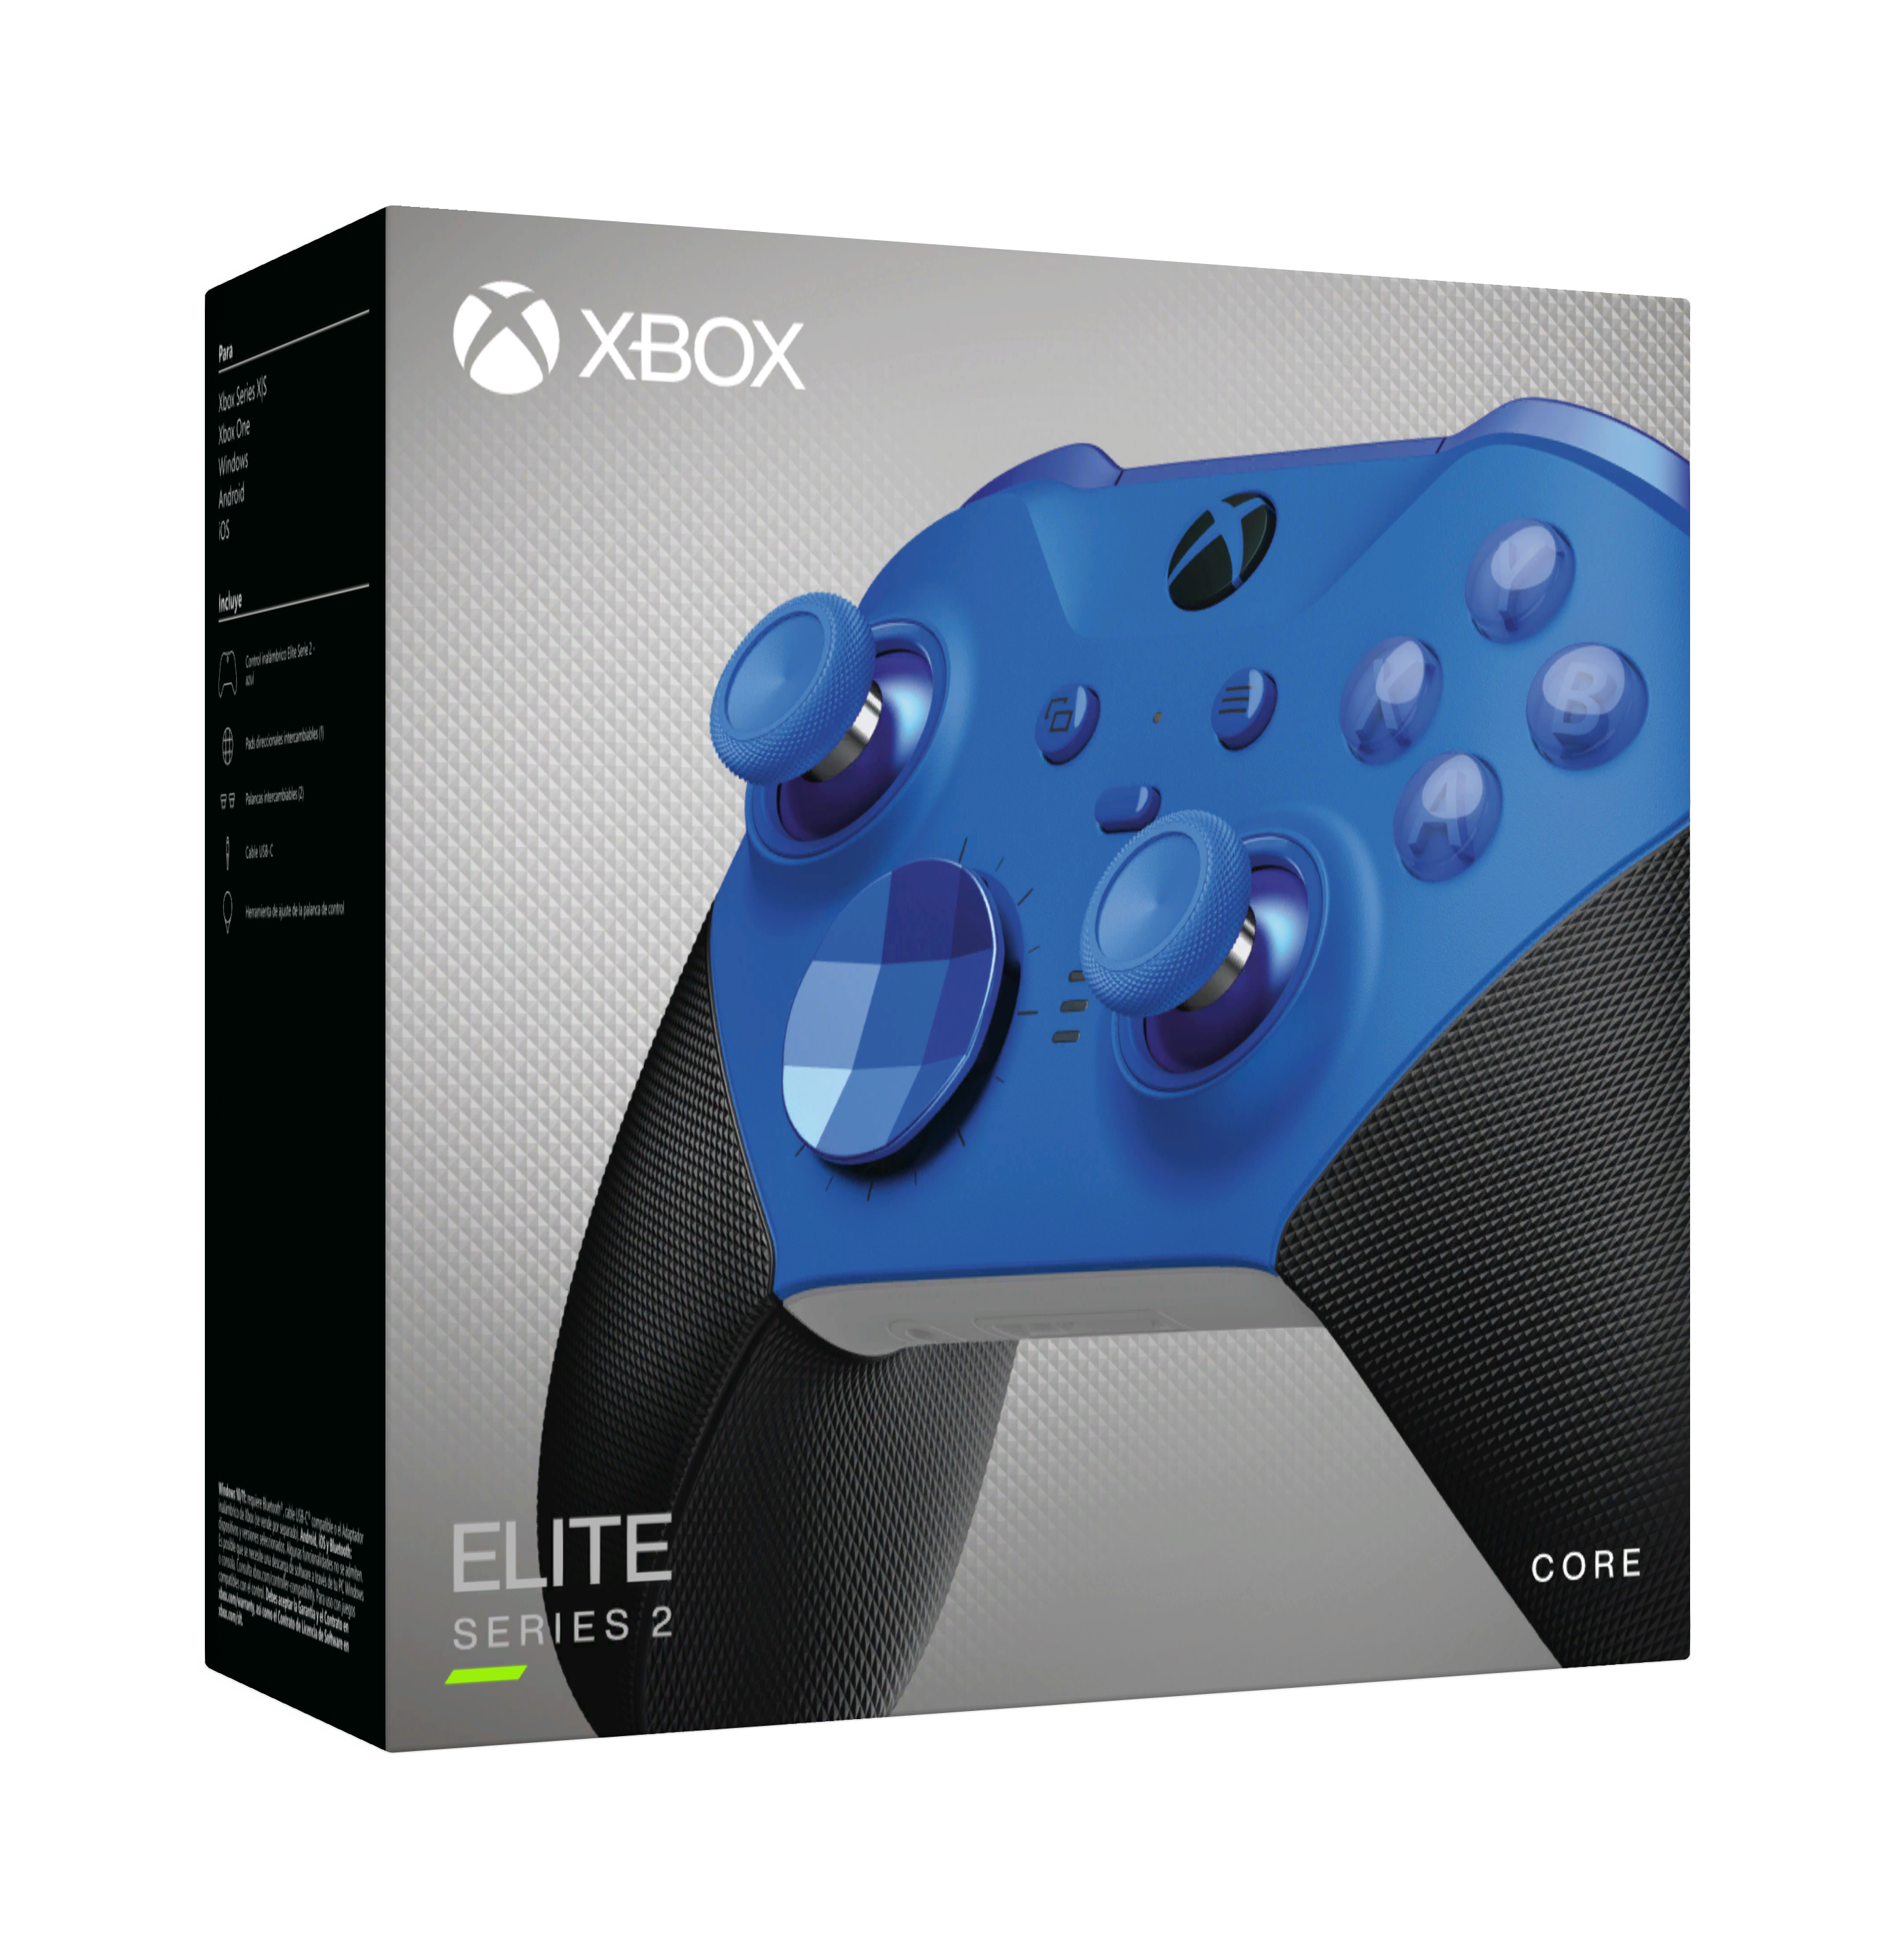  Xbox Elite Series 2 Core Wireless Gaming Controller – Blue – Xbox  Series X